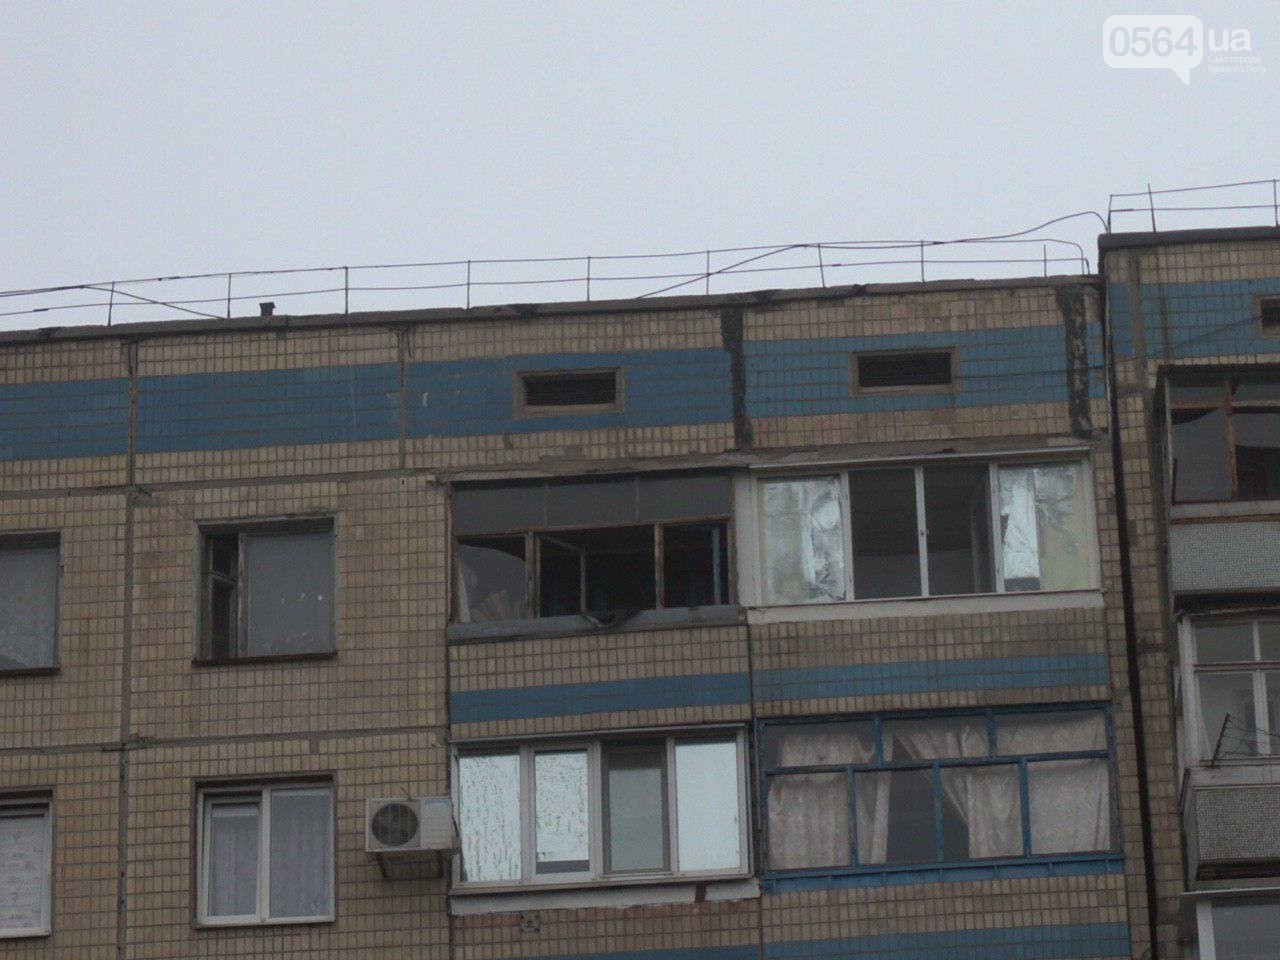 Погиб на месте: мужчина упал с 9-го этажа. Новости Днепра